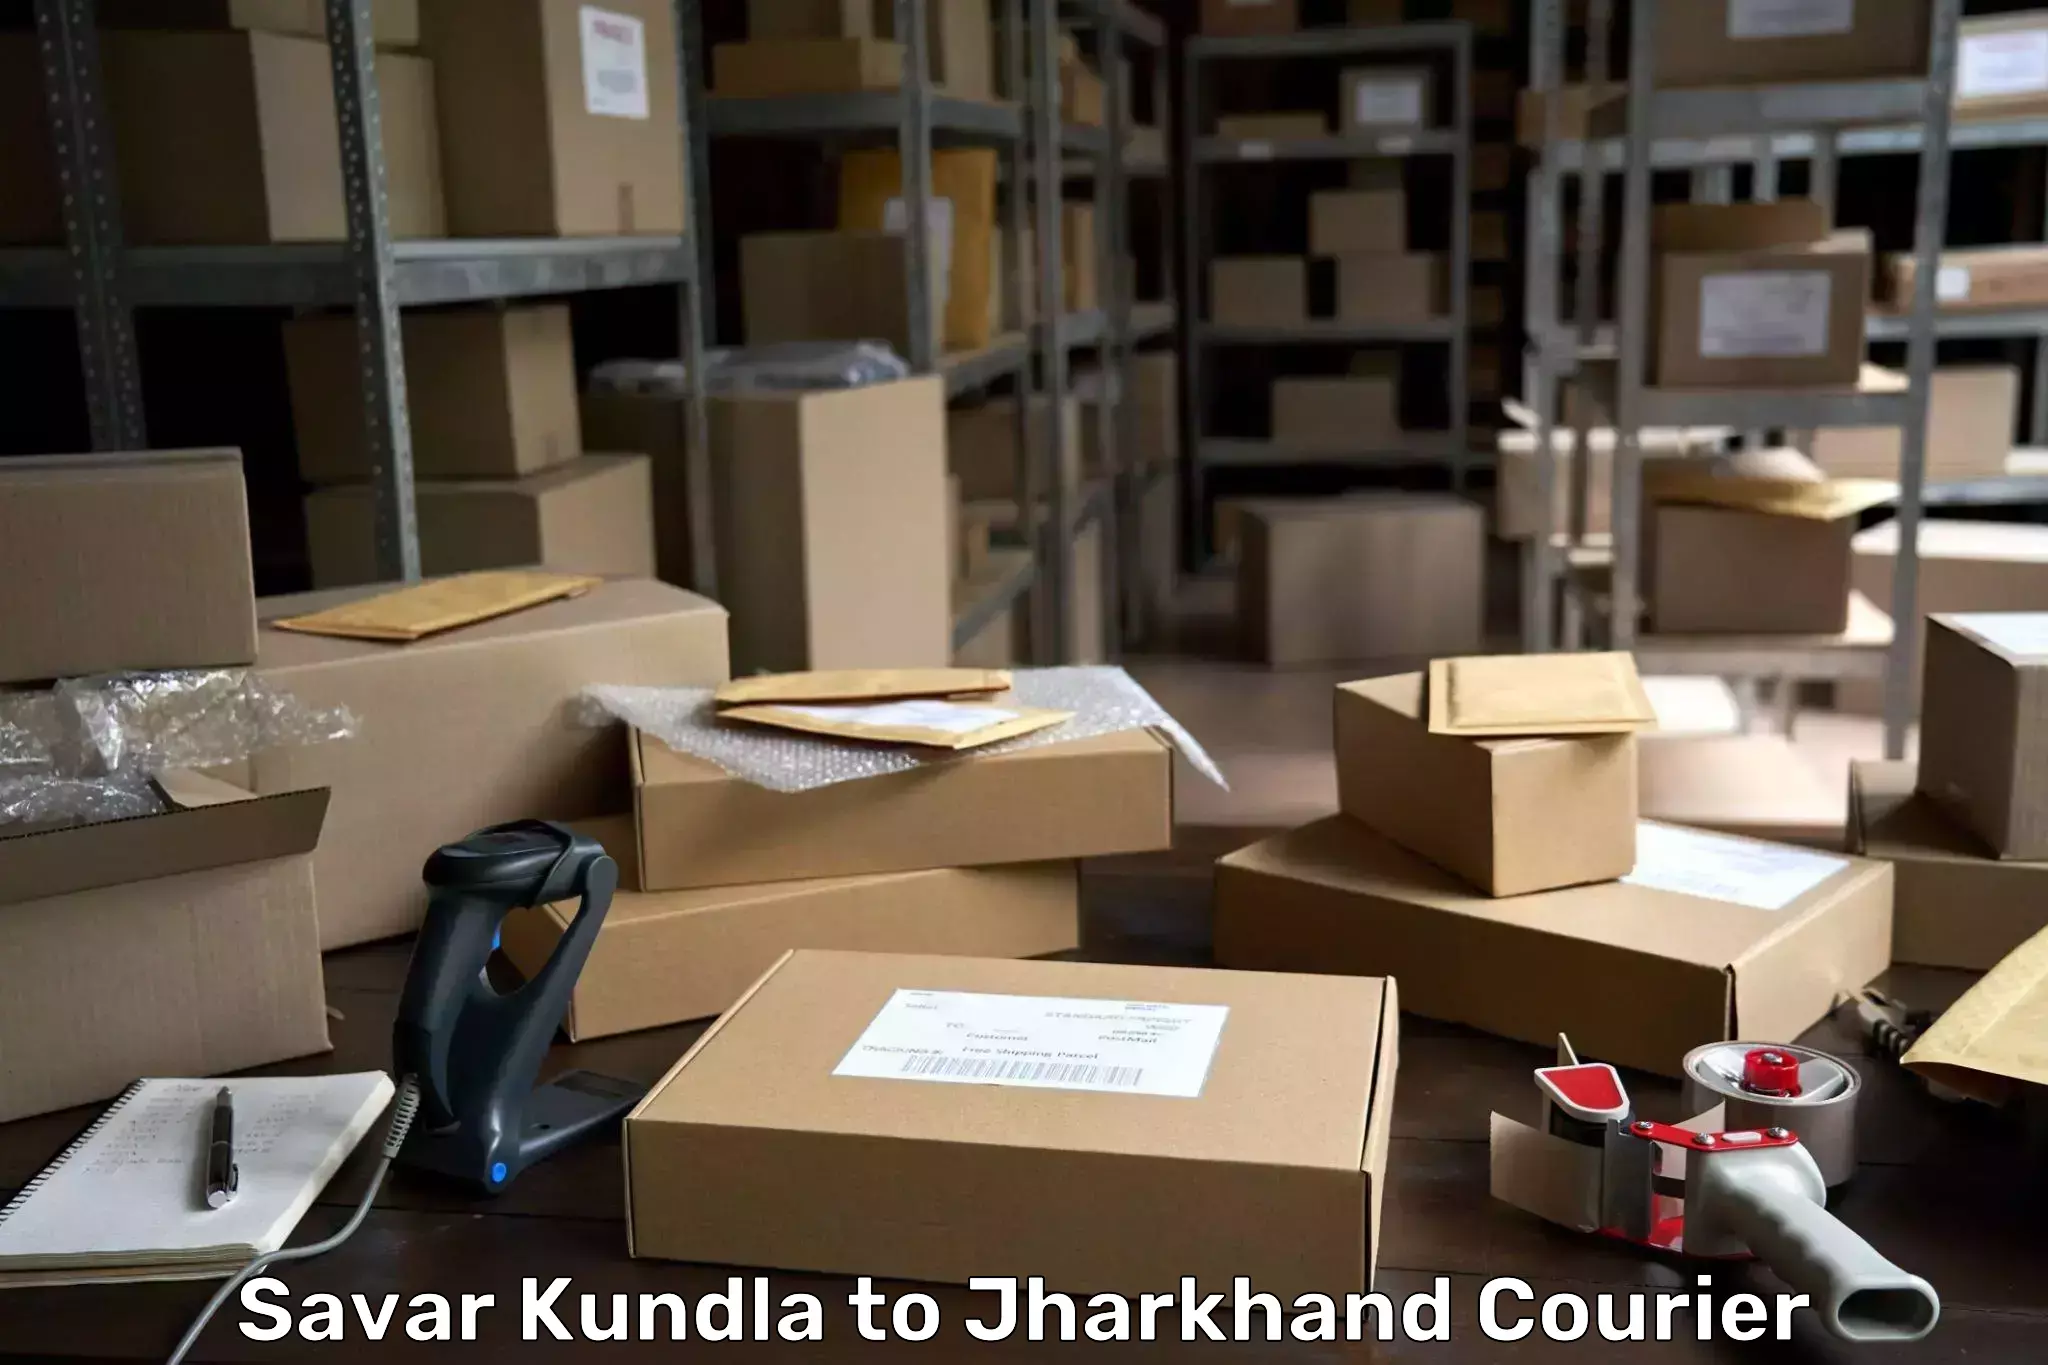 Speedy delivery service Savar Kundla to Jharkhand